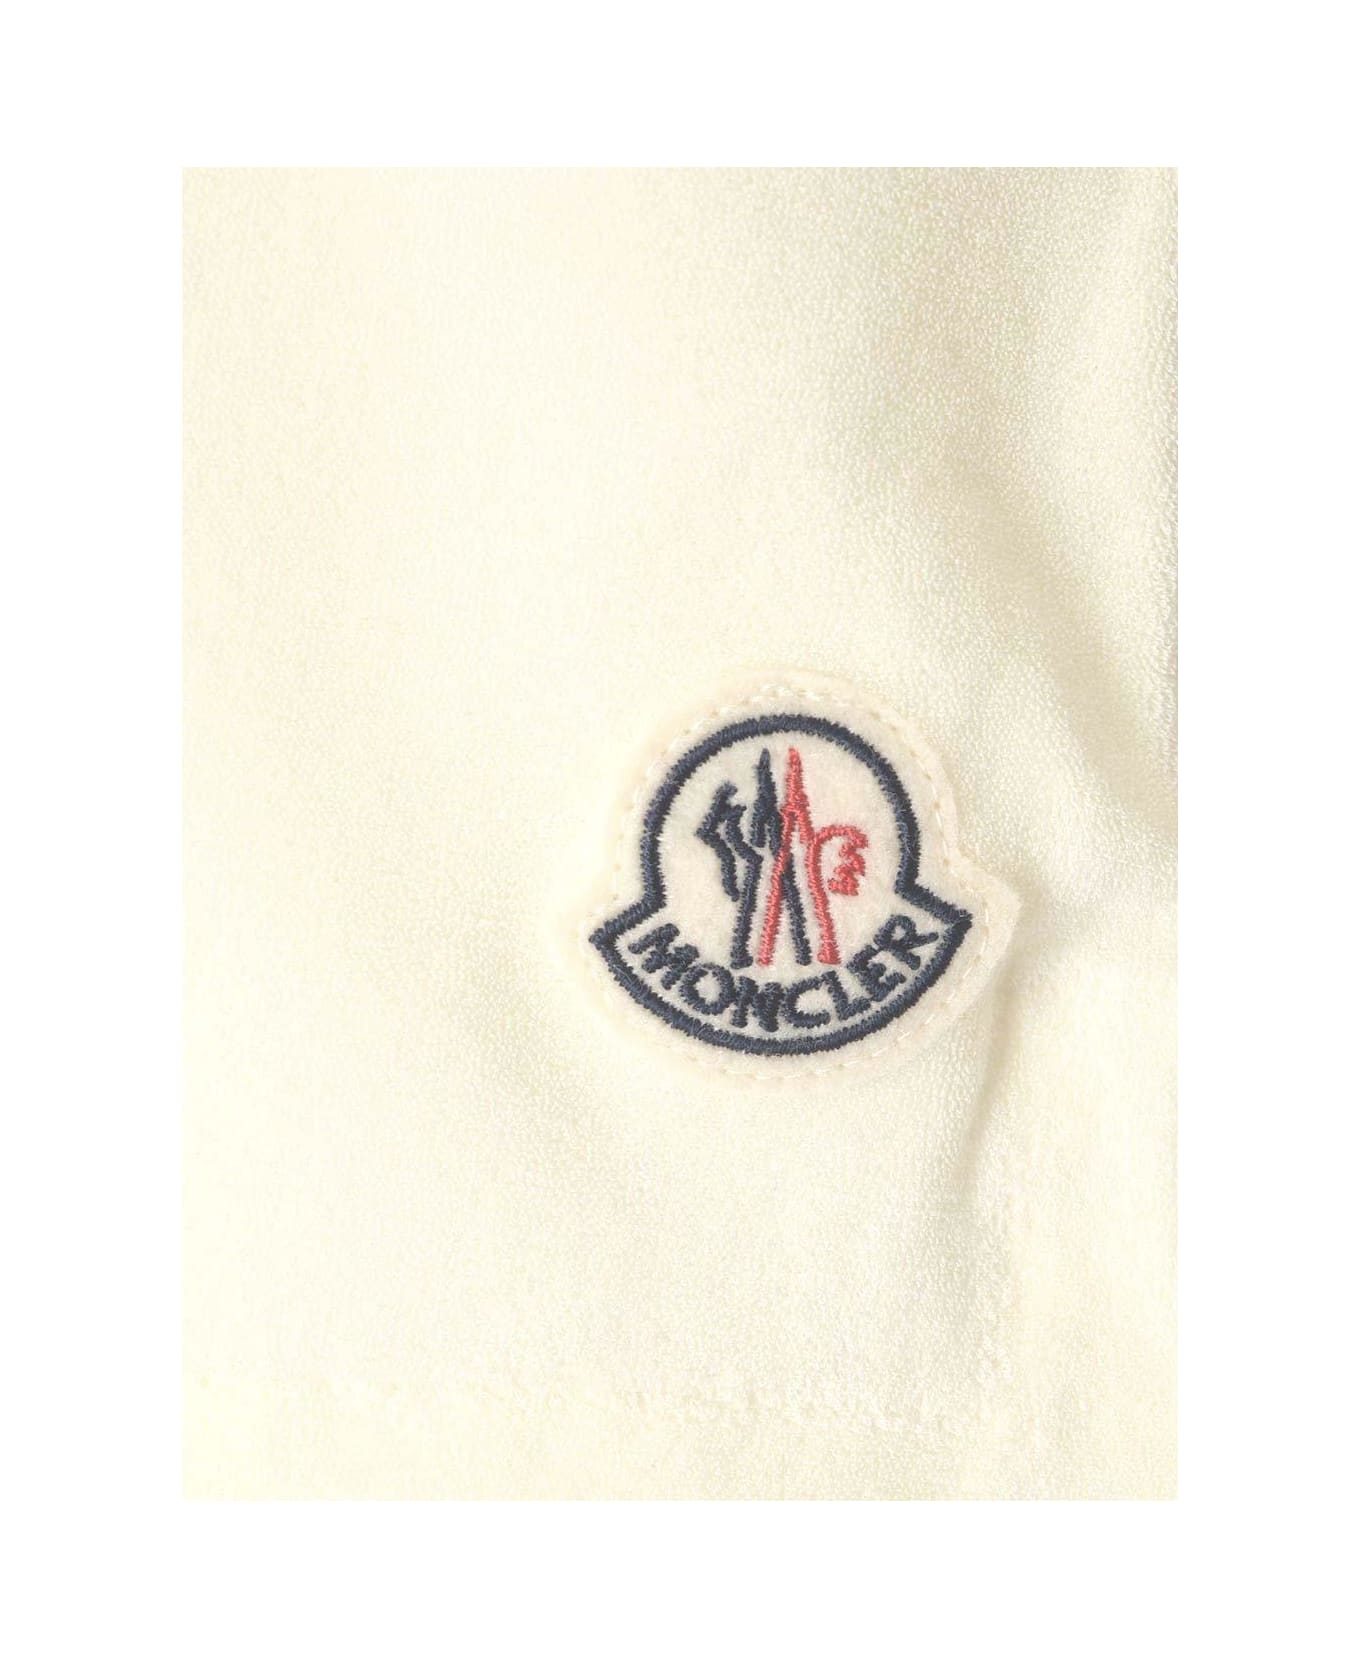 Moncler Logo Patch High Waist Shorts - Bianco